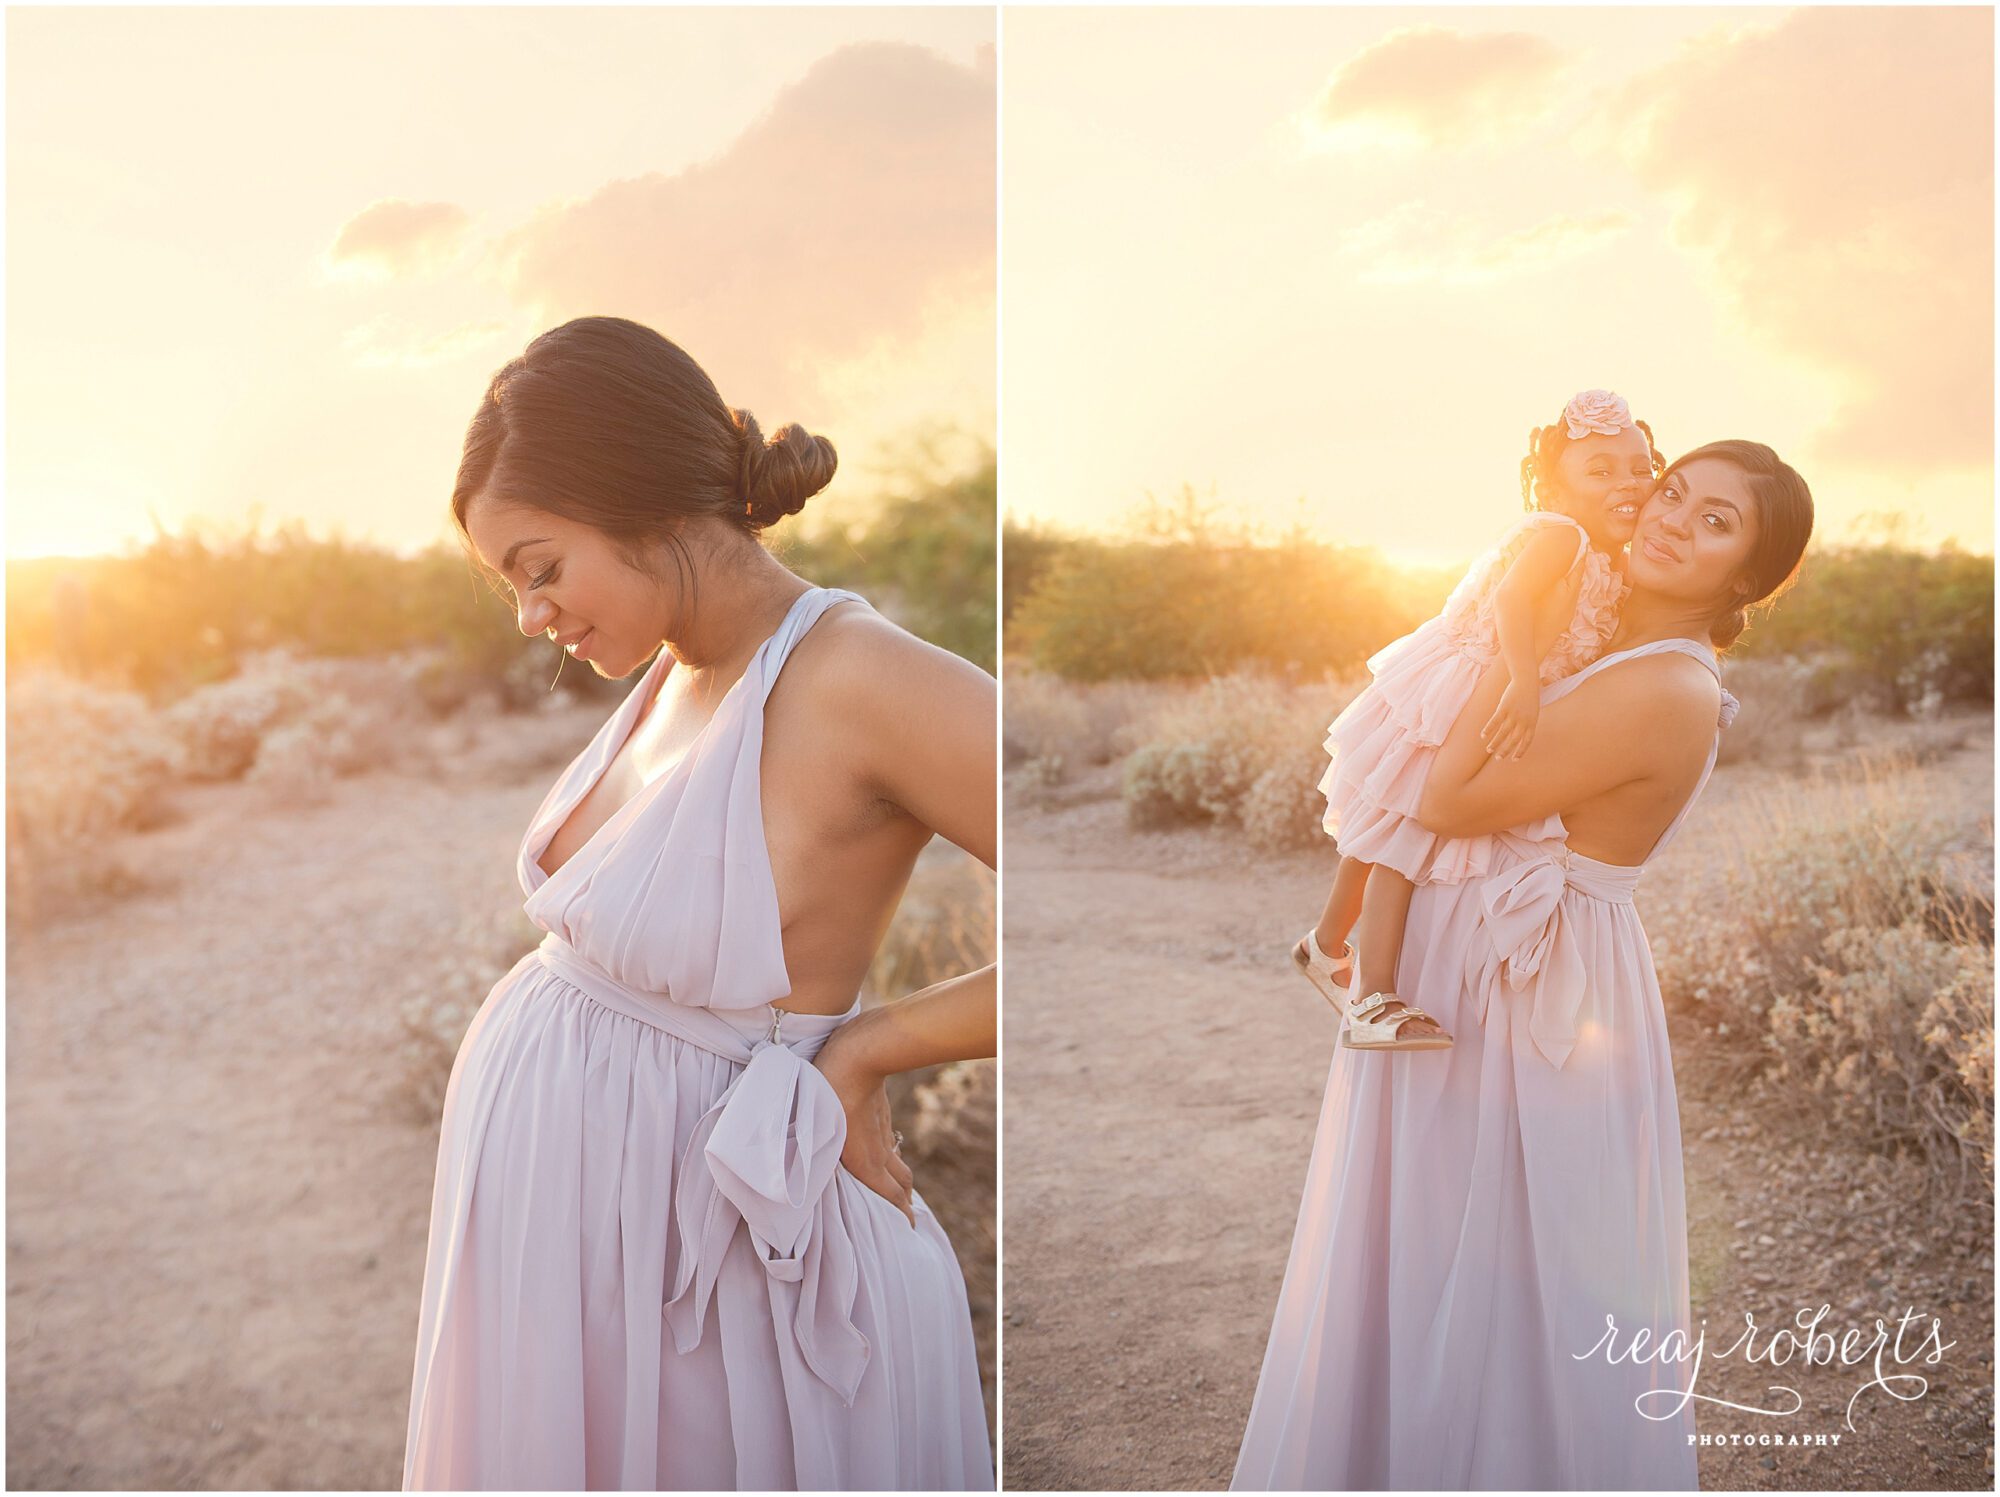 Desert sunset maternity session | Reaj Roberts Photography